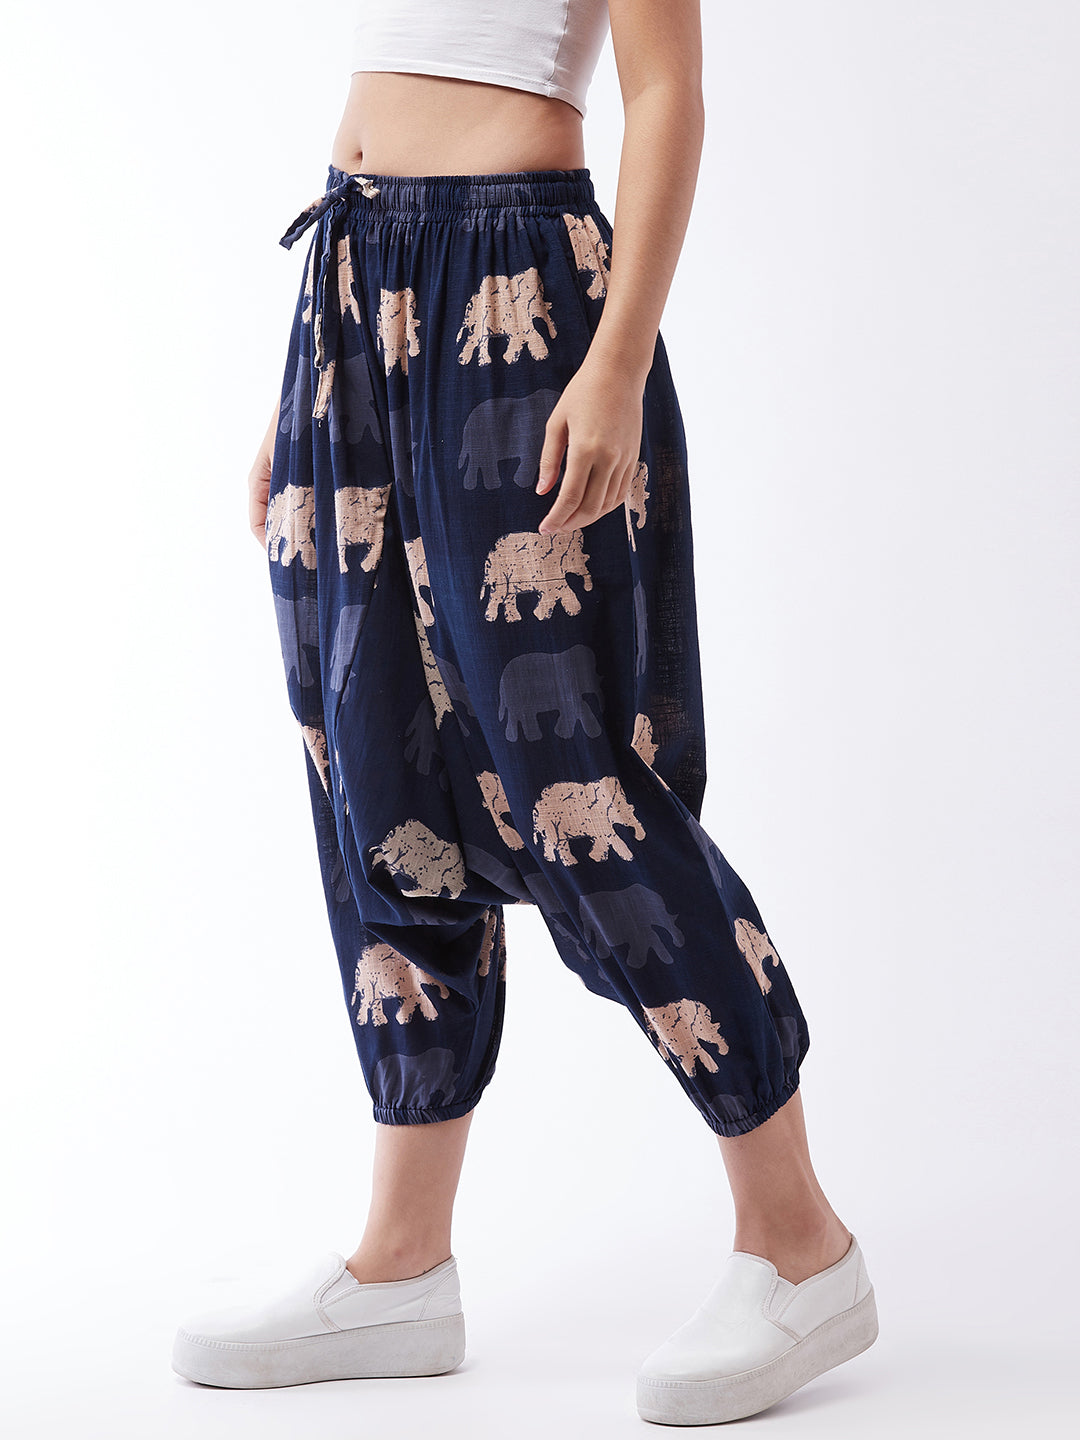 Whitewhale Mens  Women Rayon Elephant Printed Harem Pants Pockets Yog